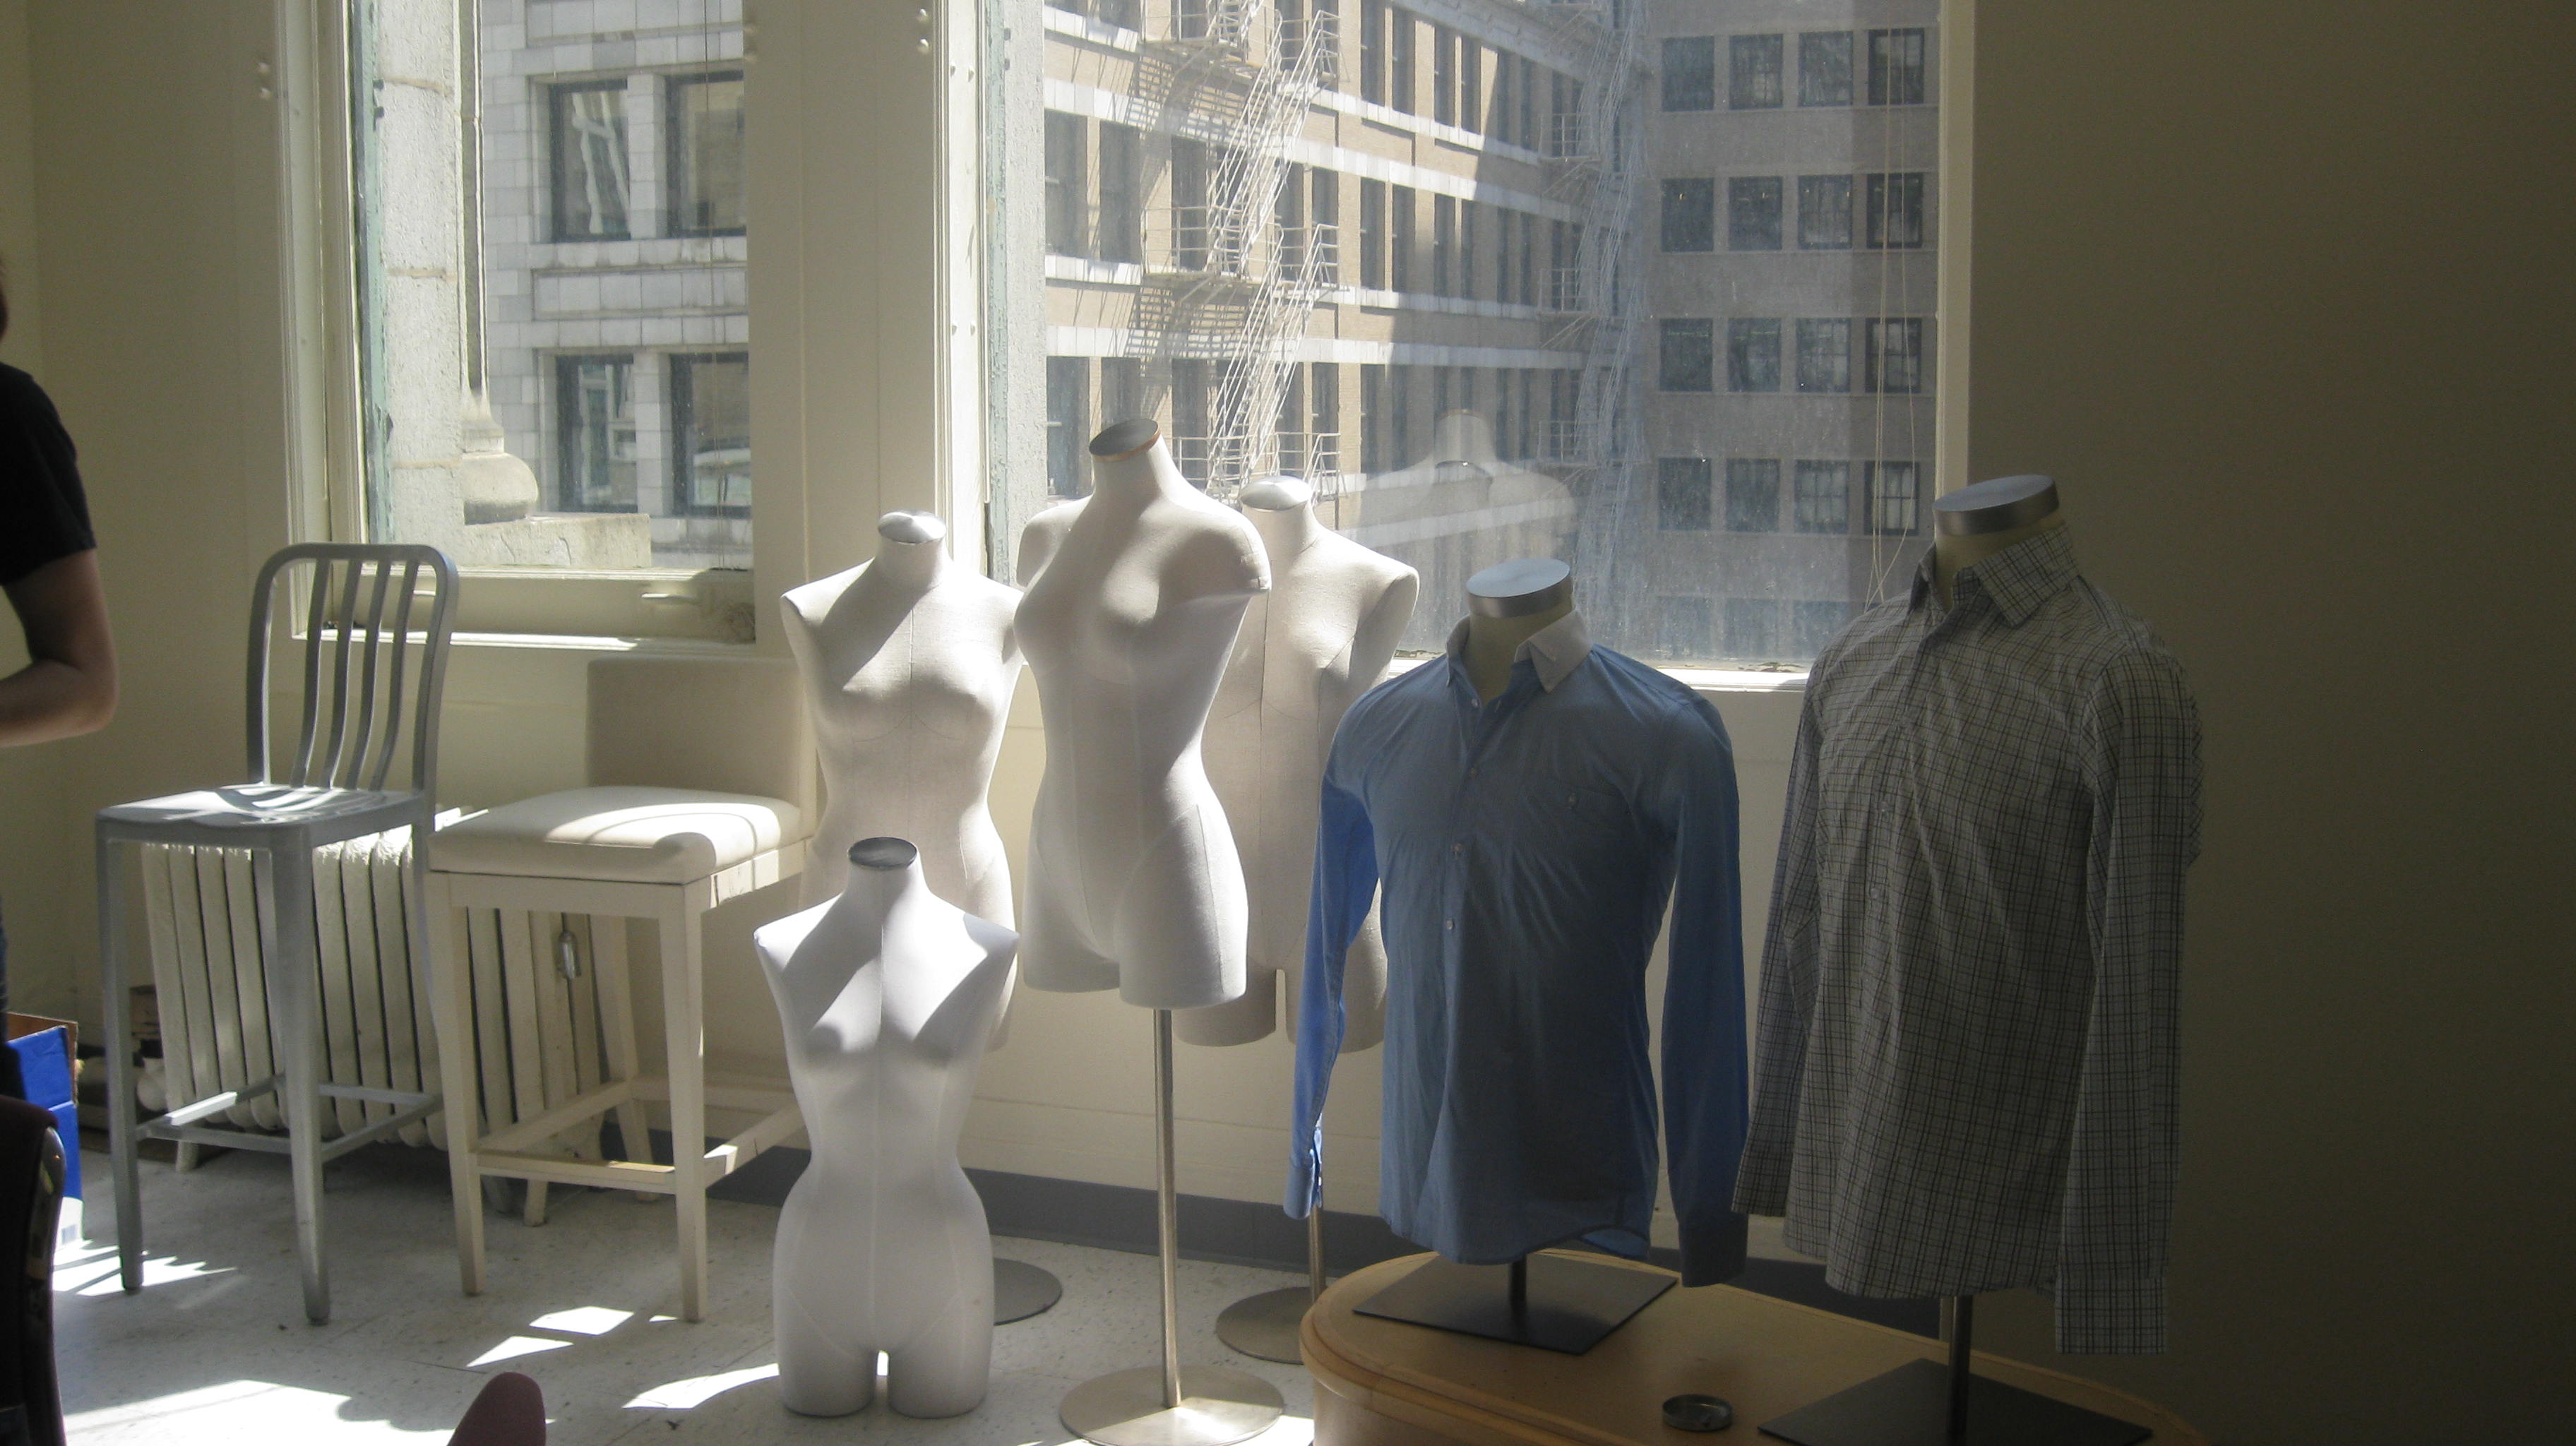 Chicago Fashion Incubator